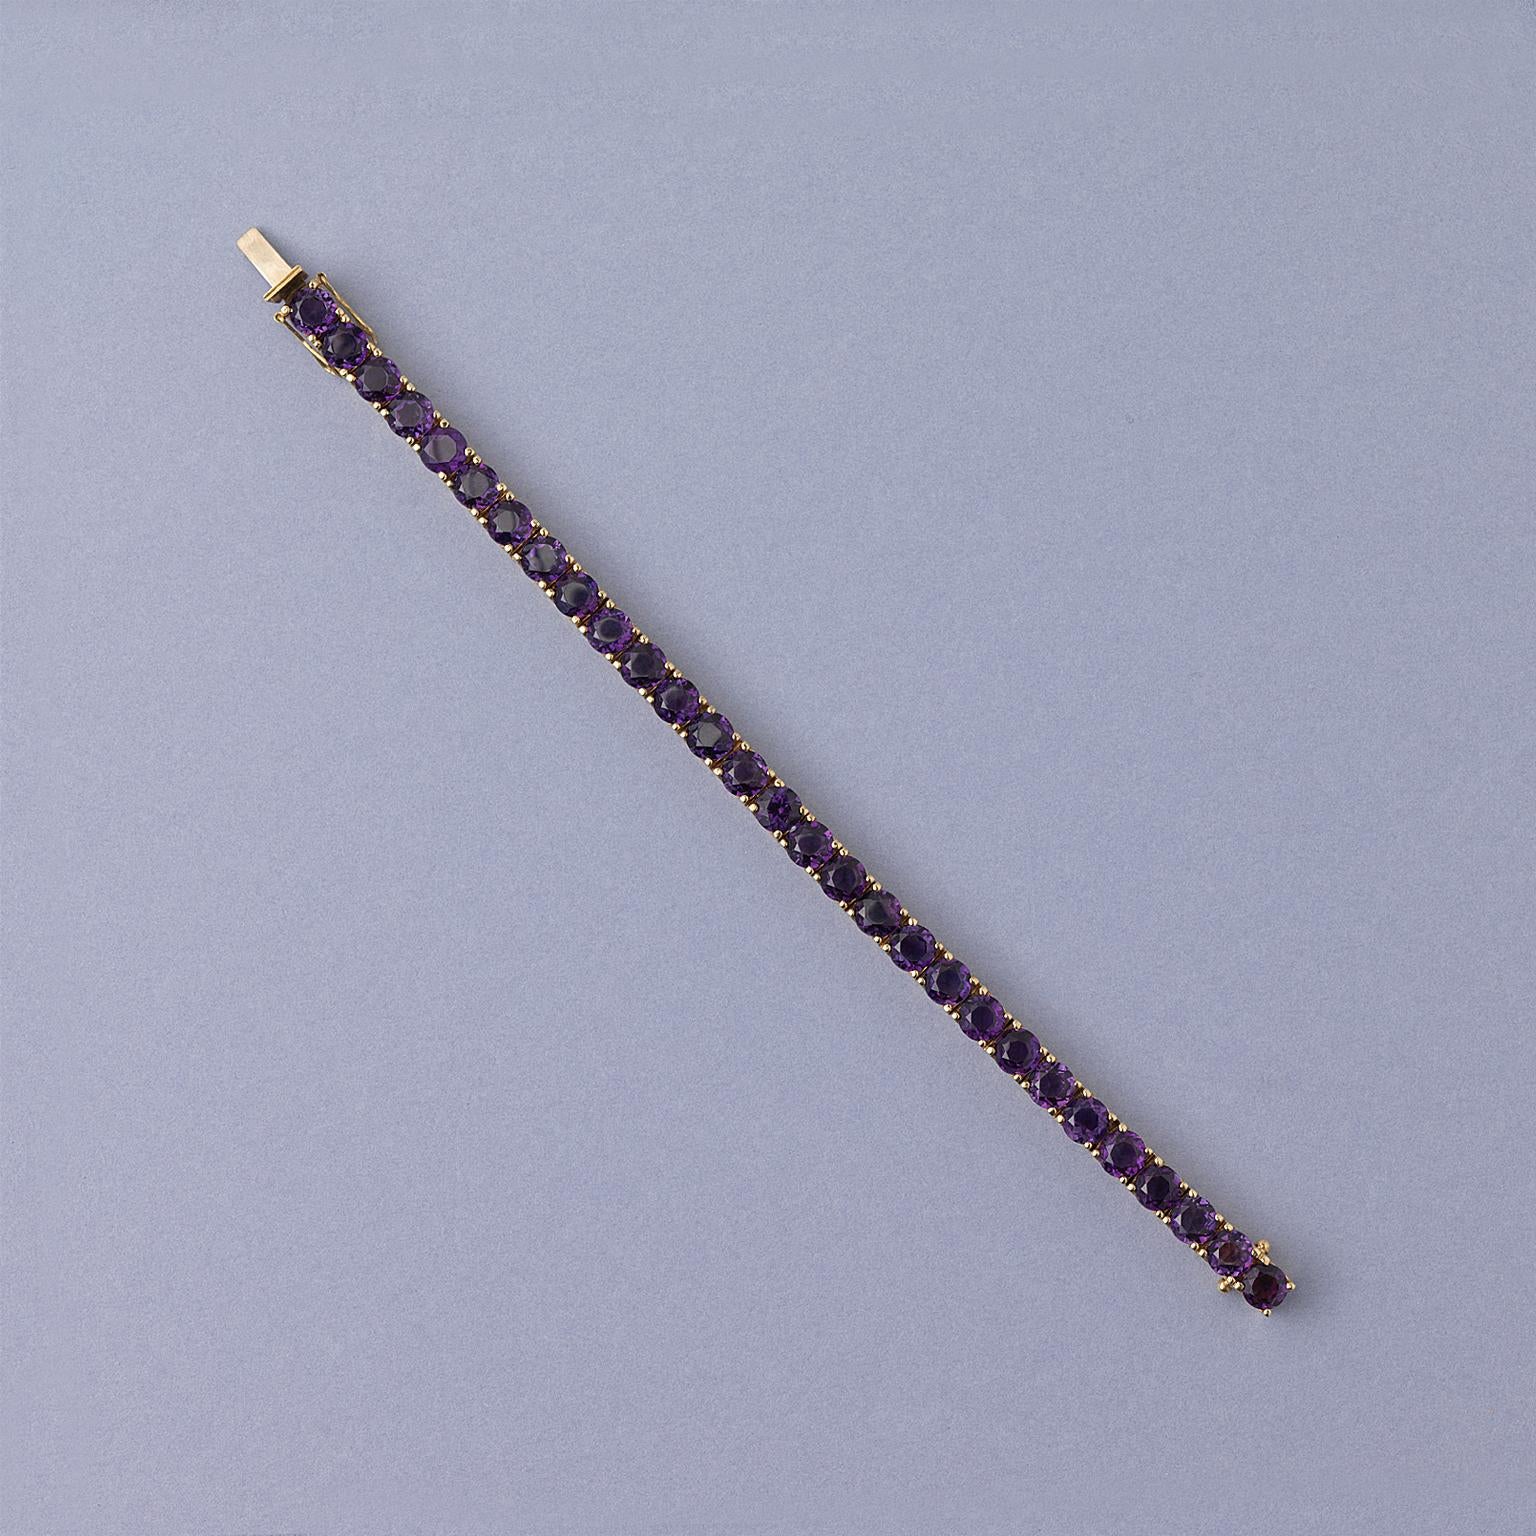 A 14 carat gold line/ tennis bracelet set with 29 round facetted deep purple amethysts.

weight: 30.8 gram
length: 18 cm
width: 0.6 cm